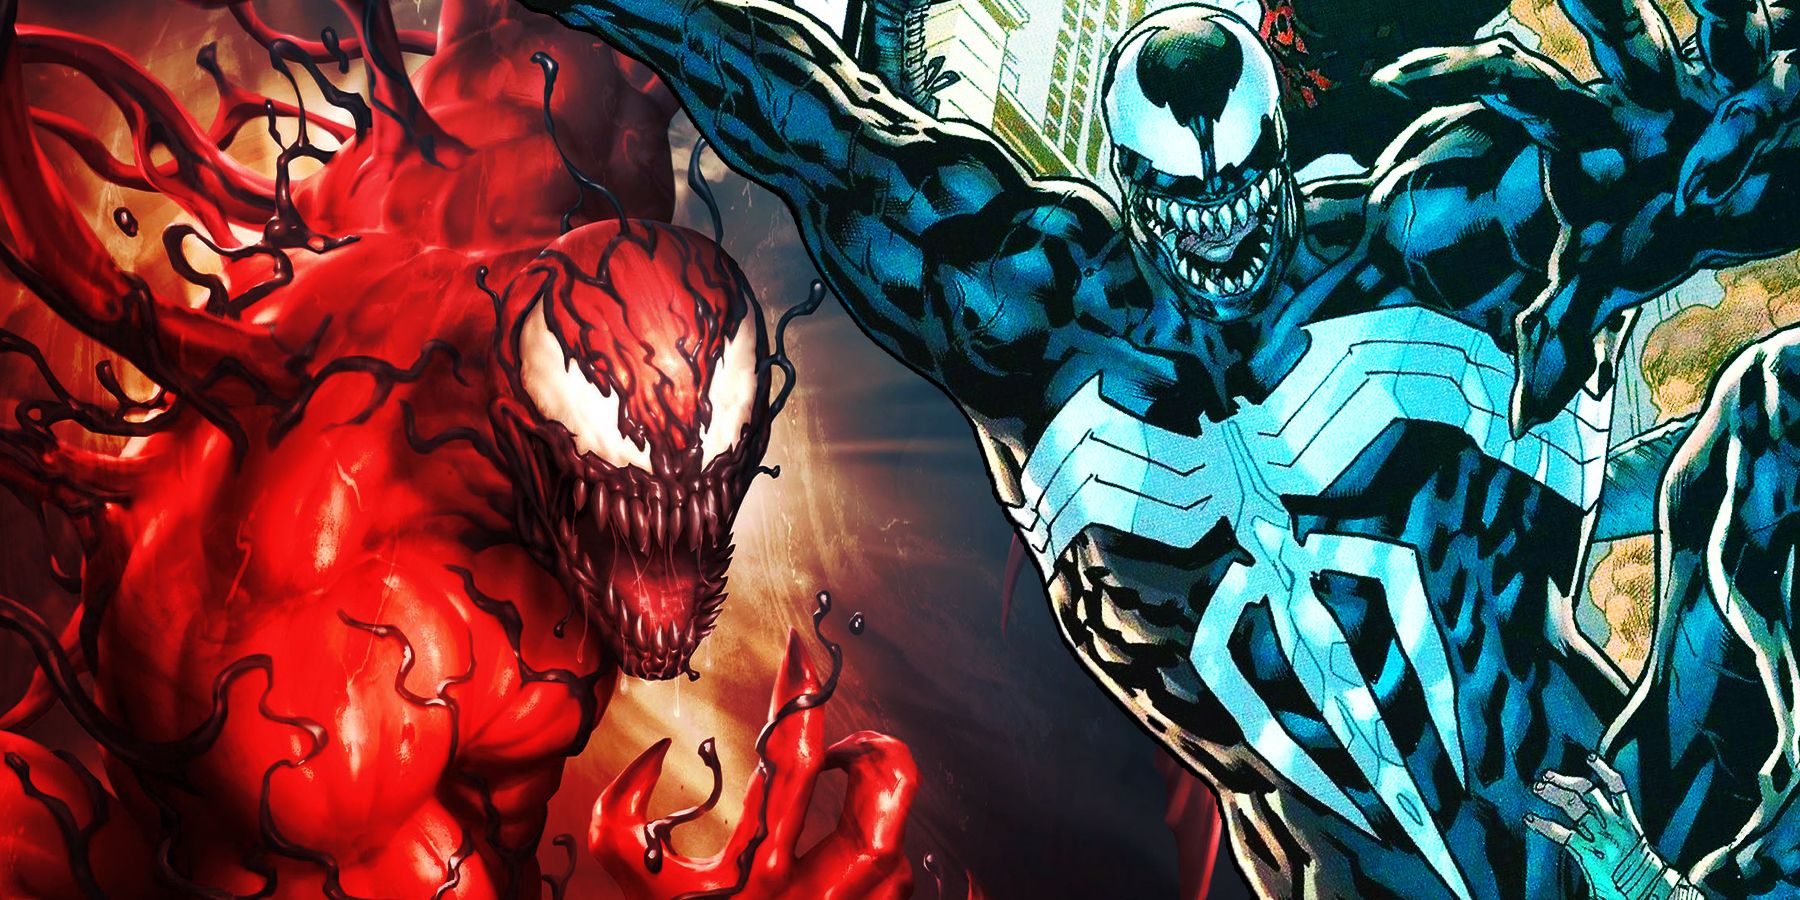 Carnage and Venom of Marvel comics